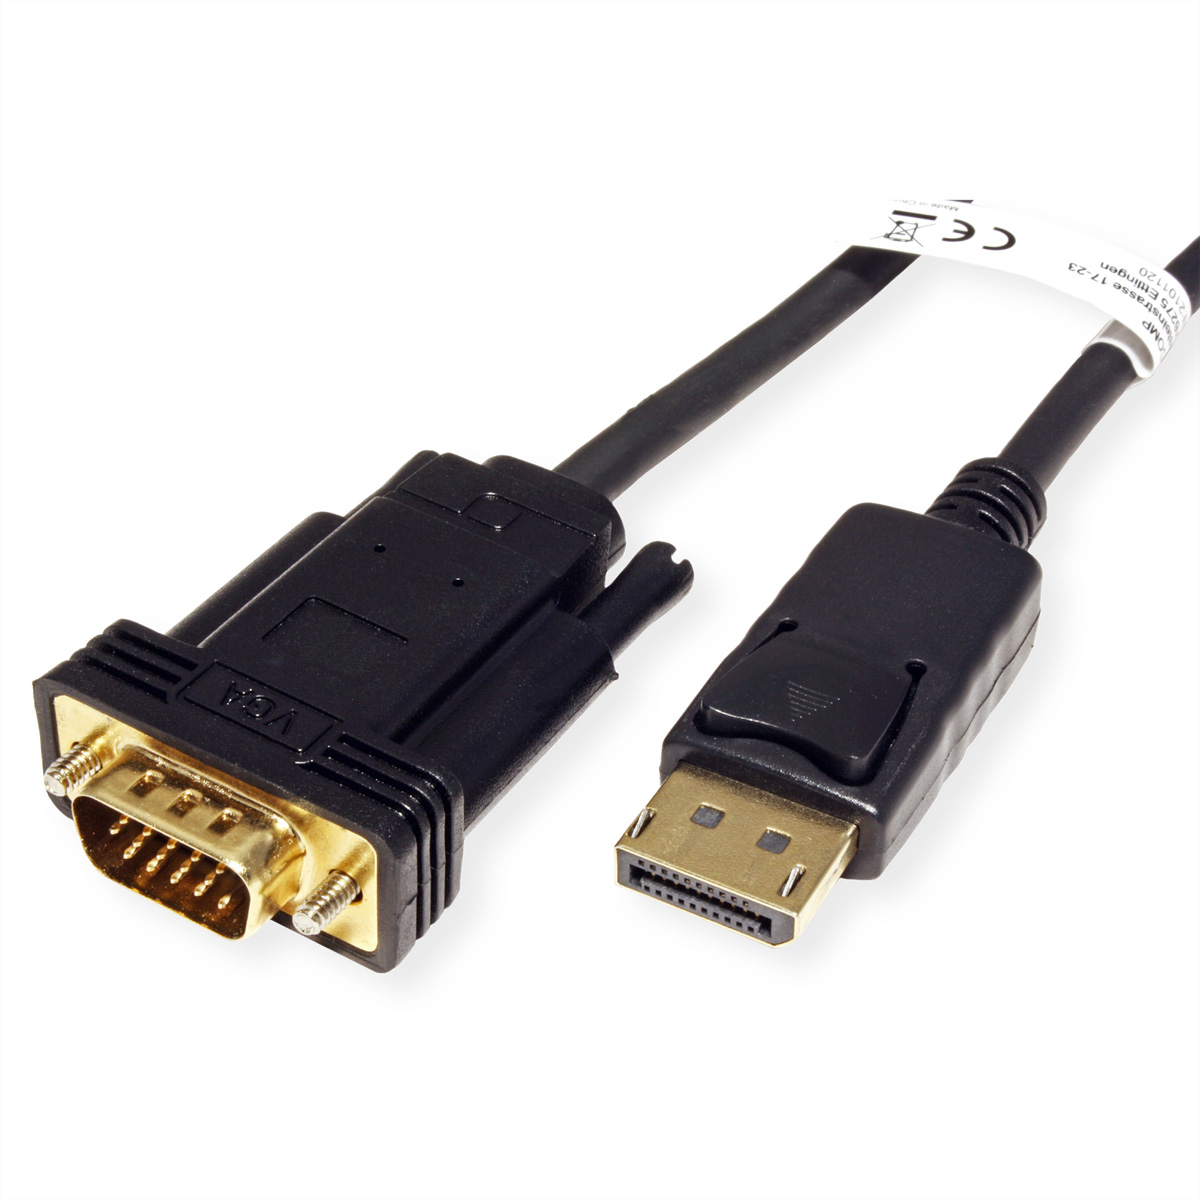 DP DisplayPort-VGA DisplayPort-VGA, VGA ST Kabel ST ROLINE - Adapter